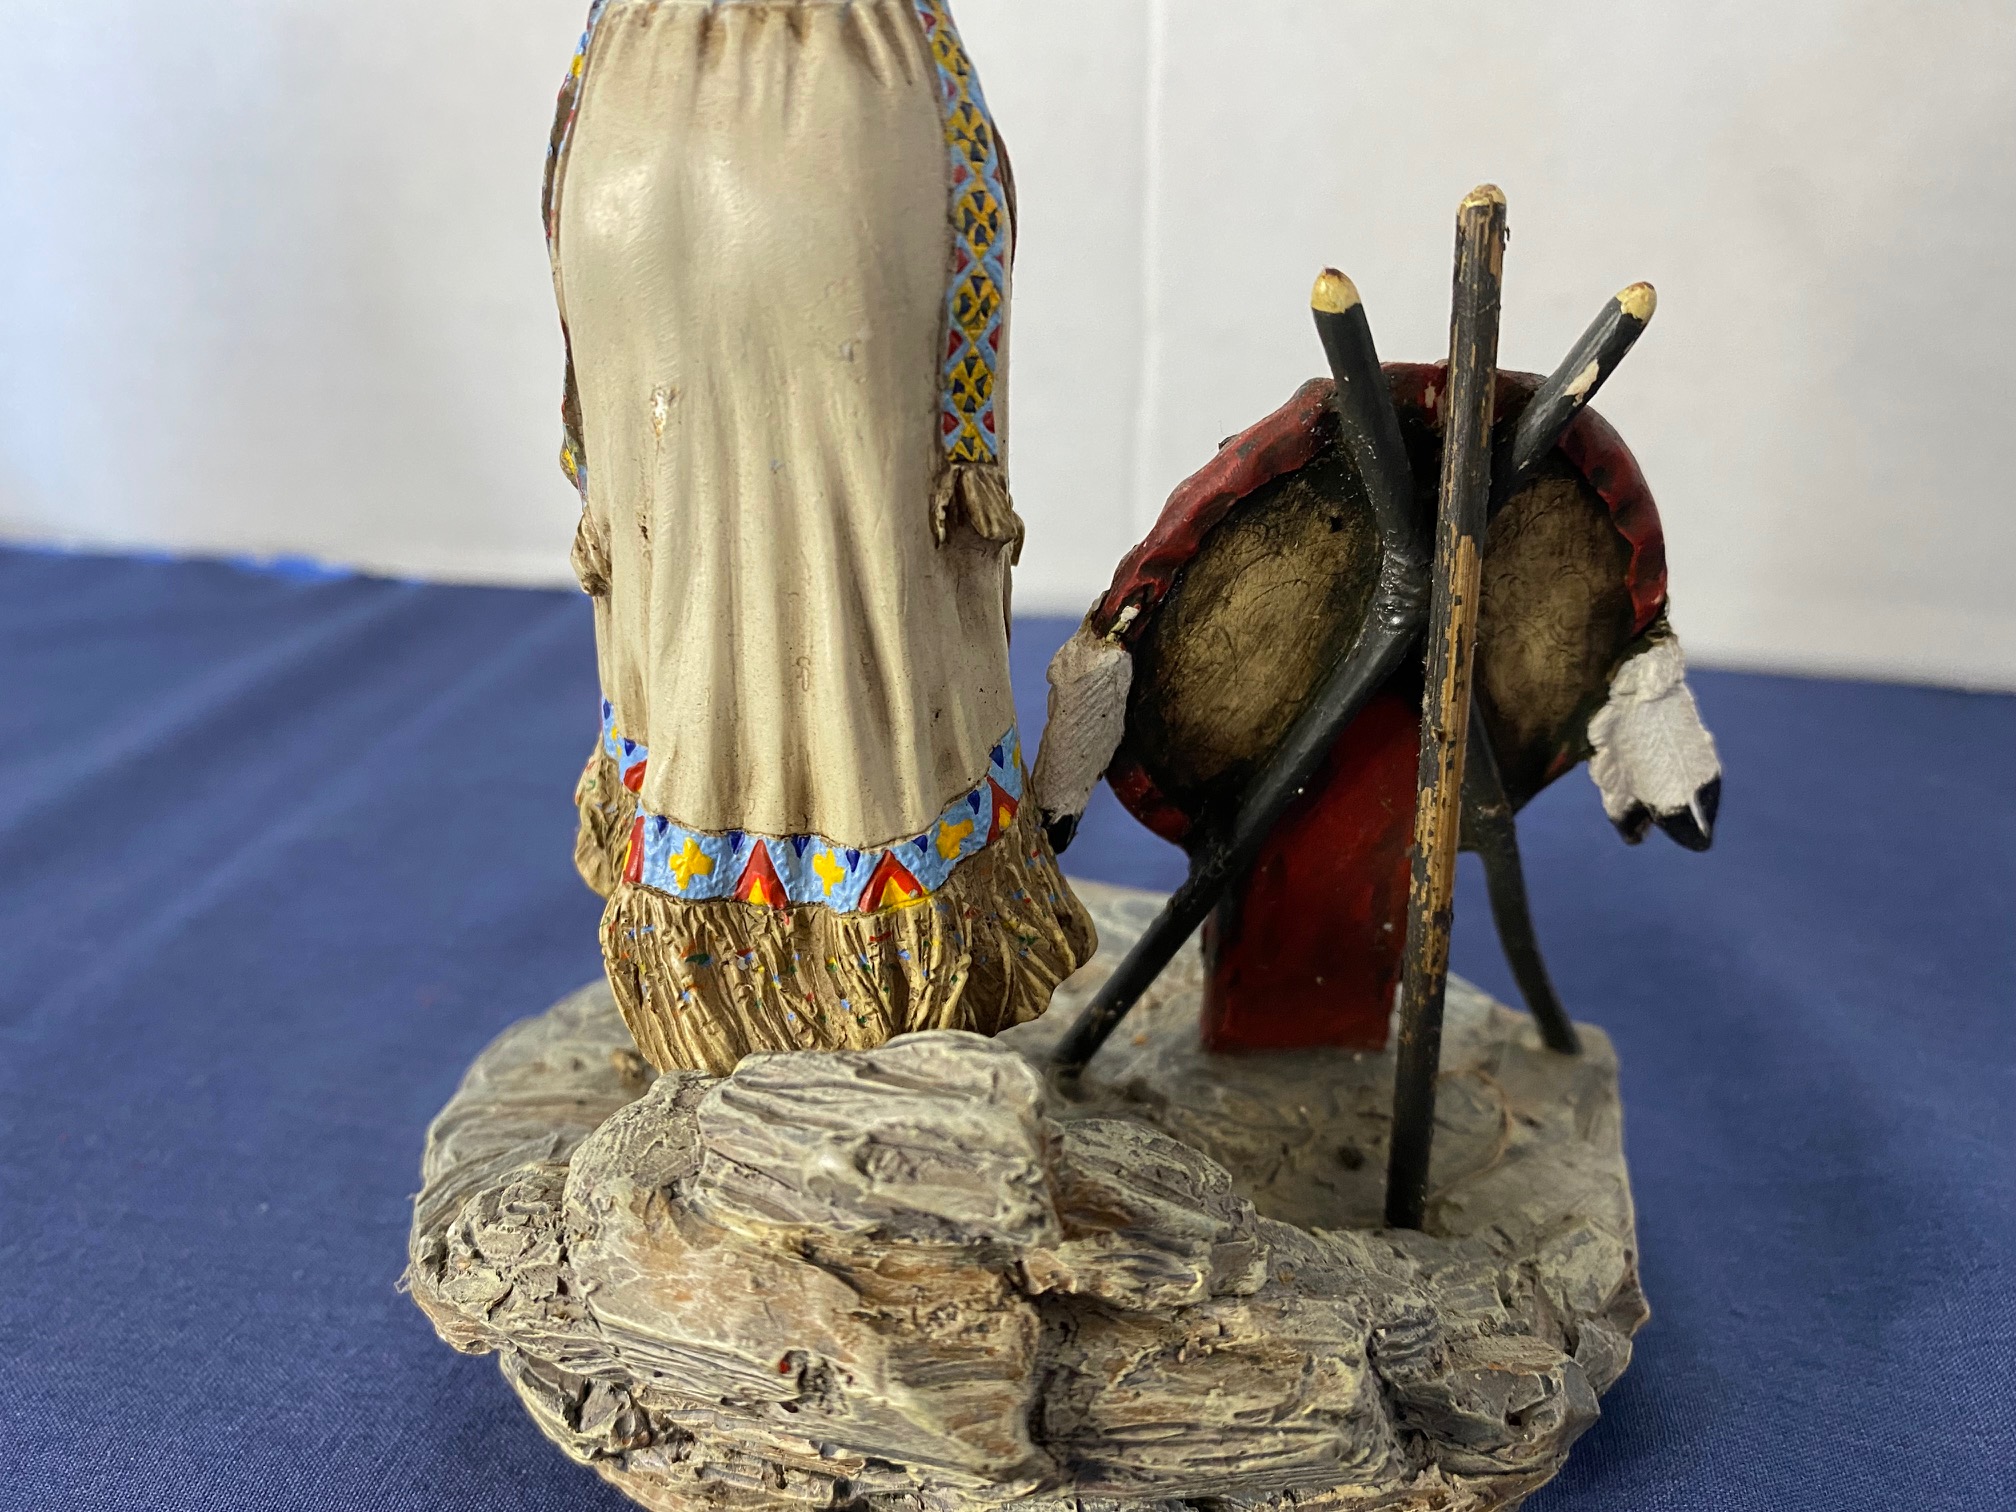 Hamilton Collection “Legend of The Buffalo Maiden” 1997 Figurine